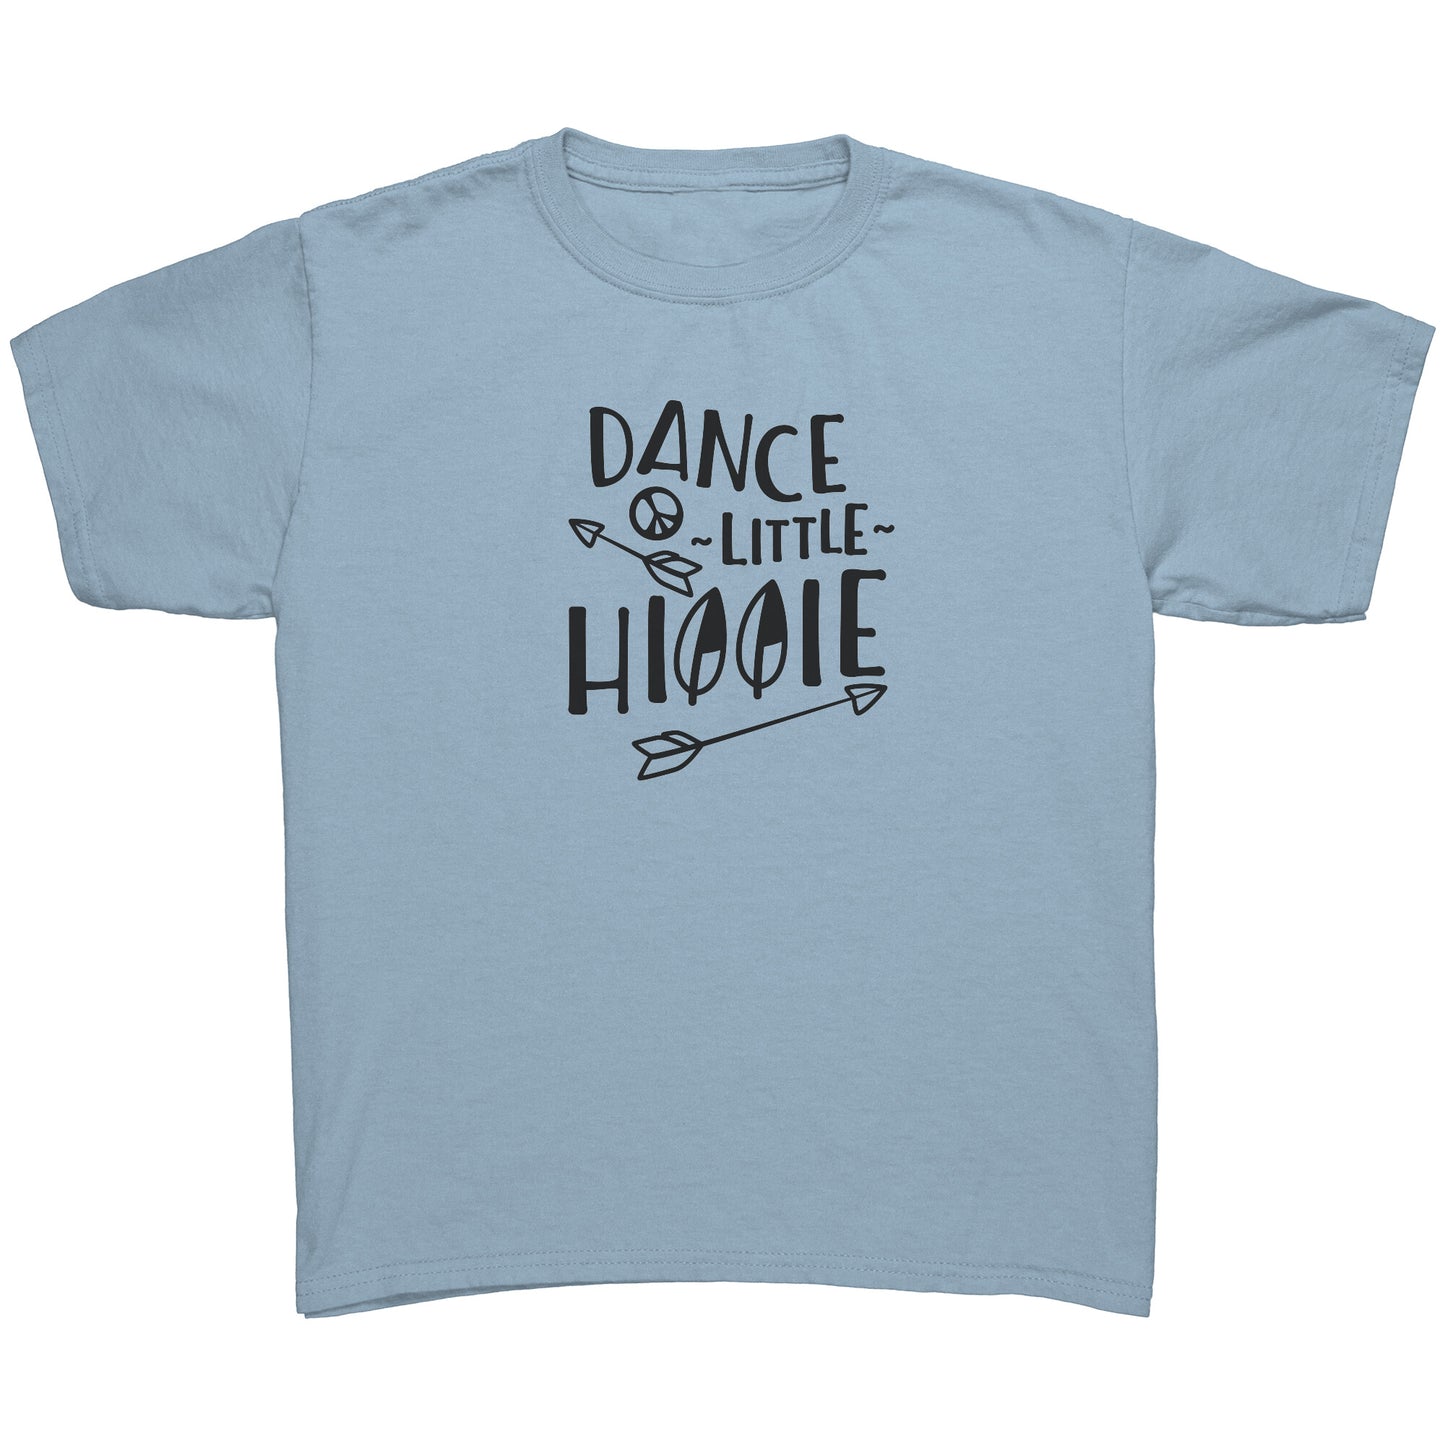 Dance Little Hippie Youth Shirt